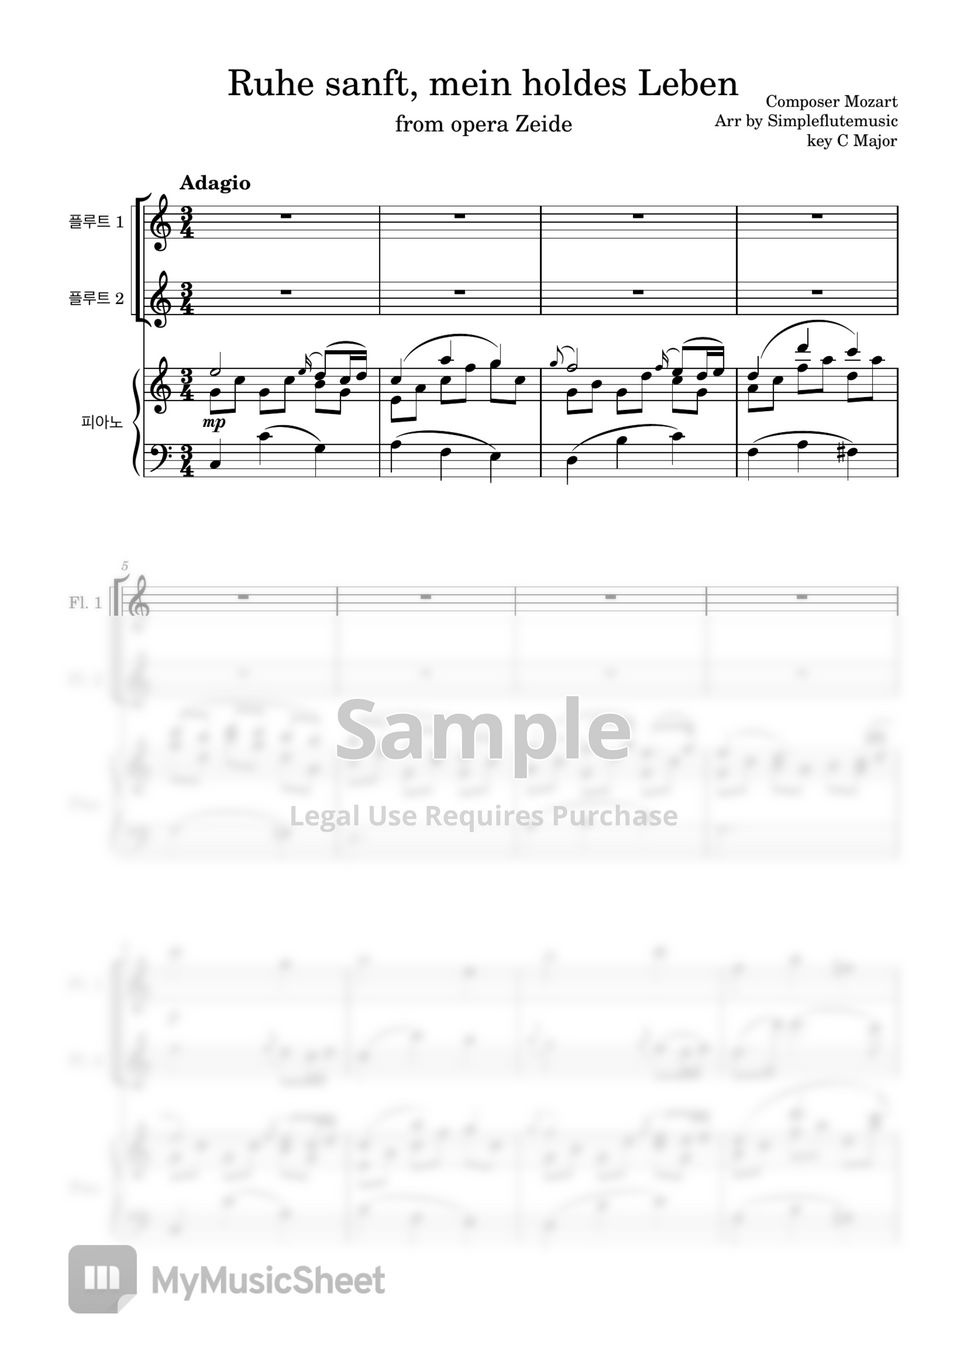 Mozart - Ruhe sanft, mein holdes leben from Opera zeide (Two Flutes/ Piano / MR) by Simpleflutemusic